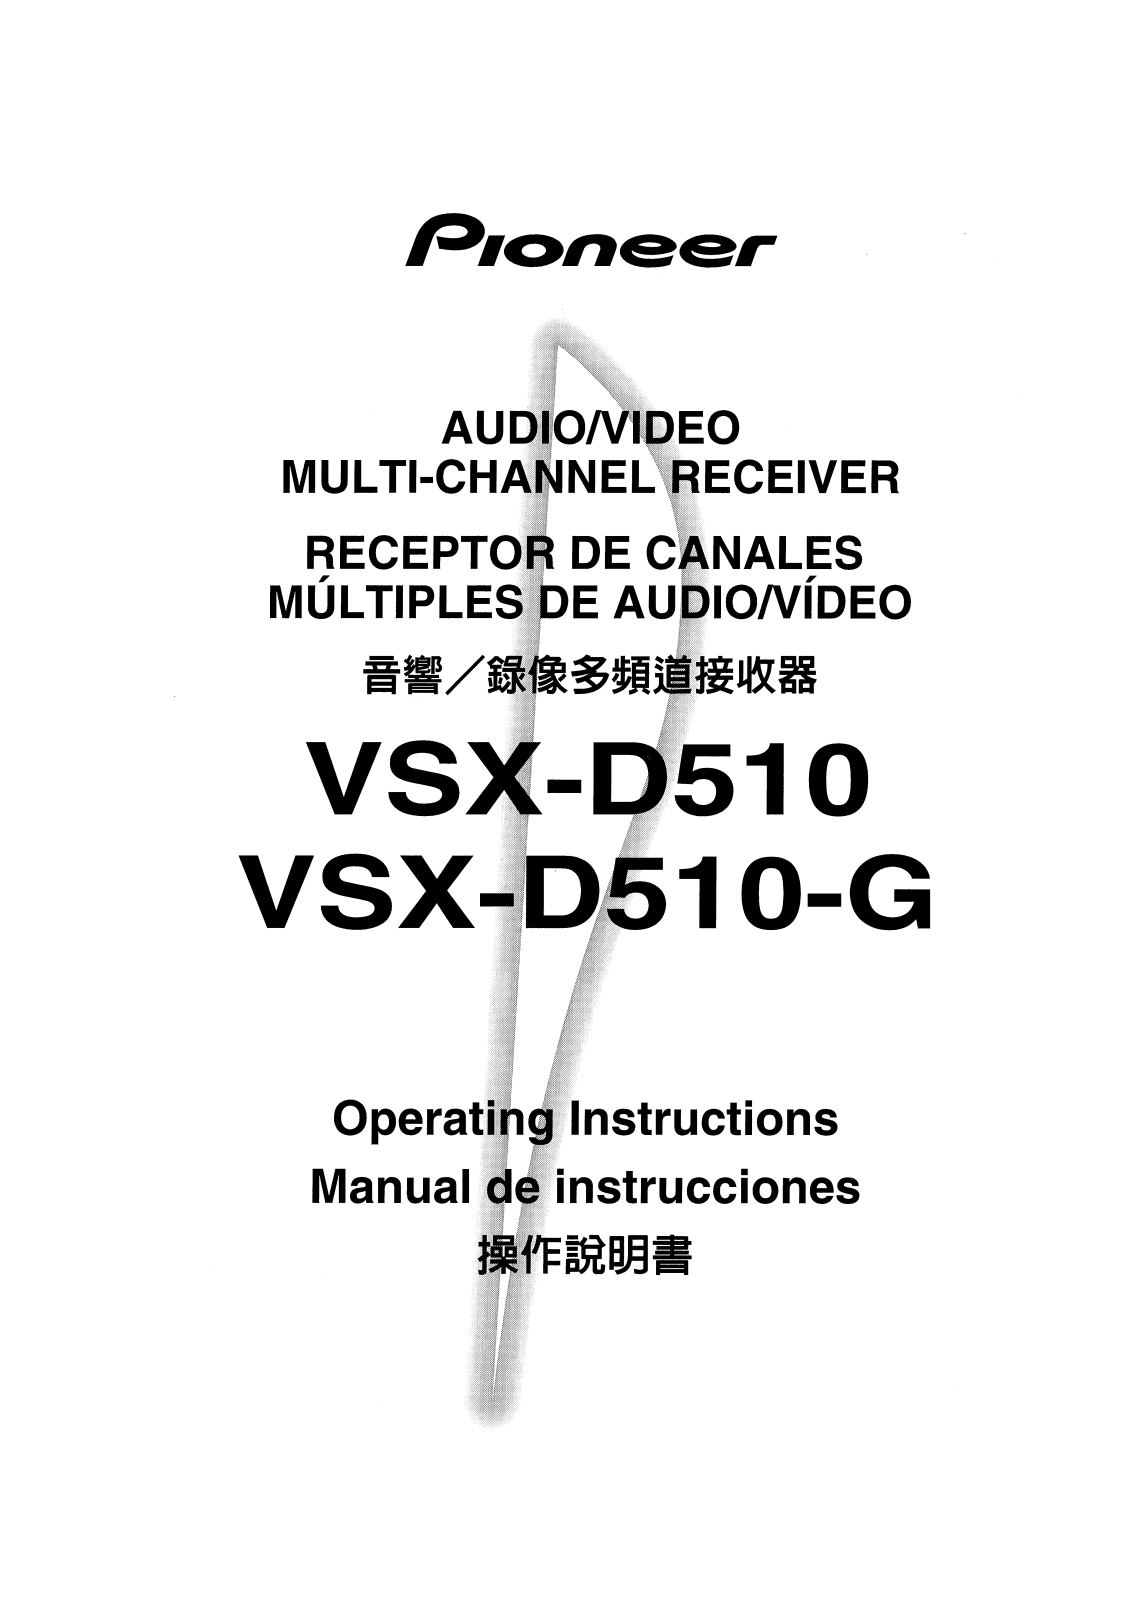 Pioneer VSX-D510, VSX-D510-G Manual